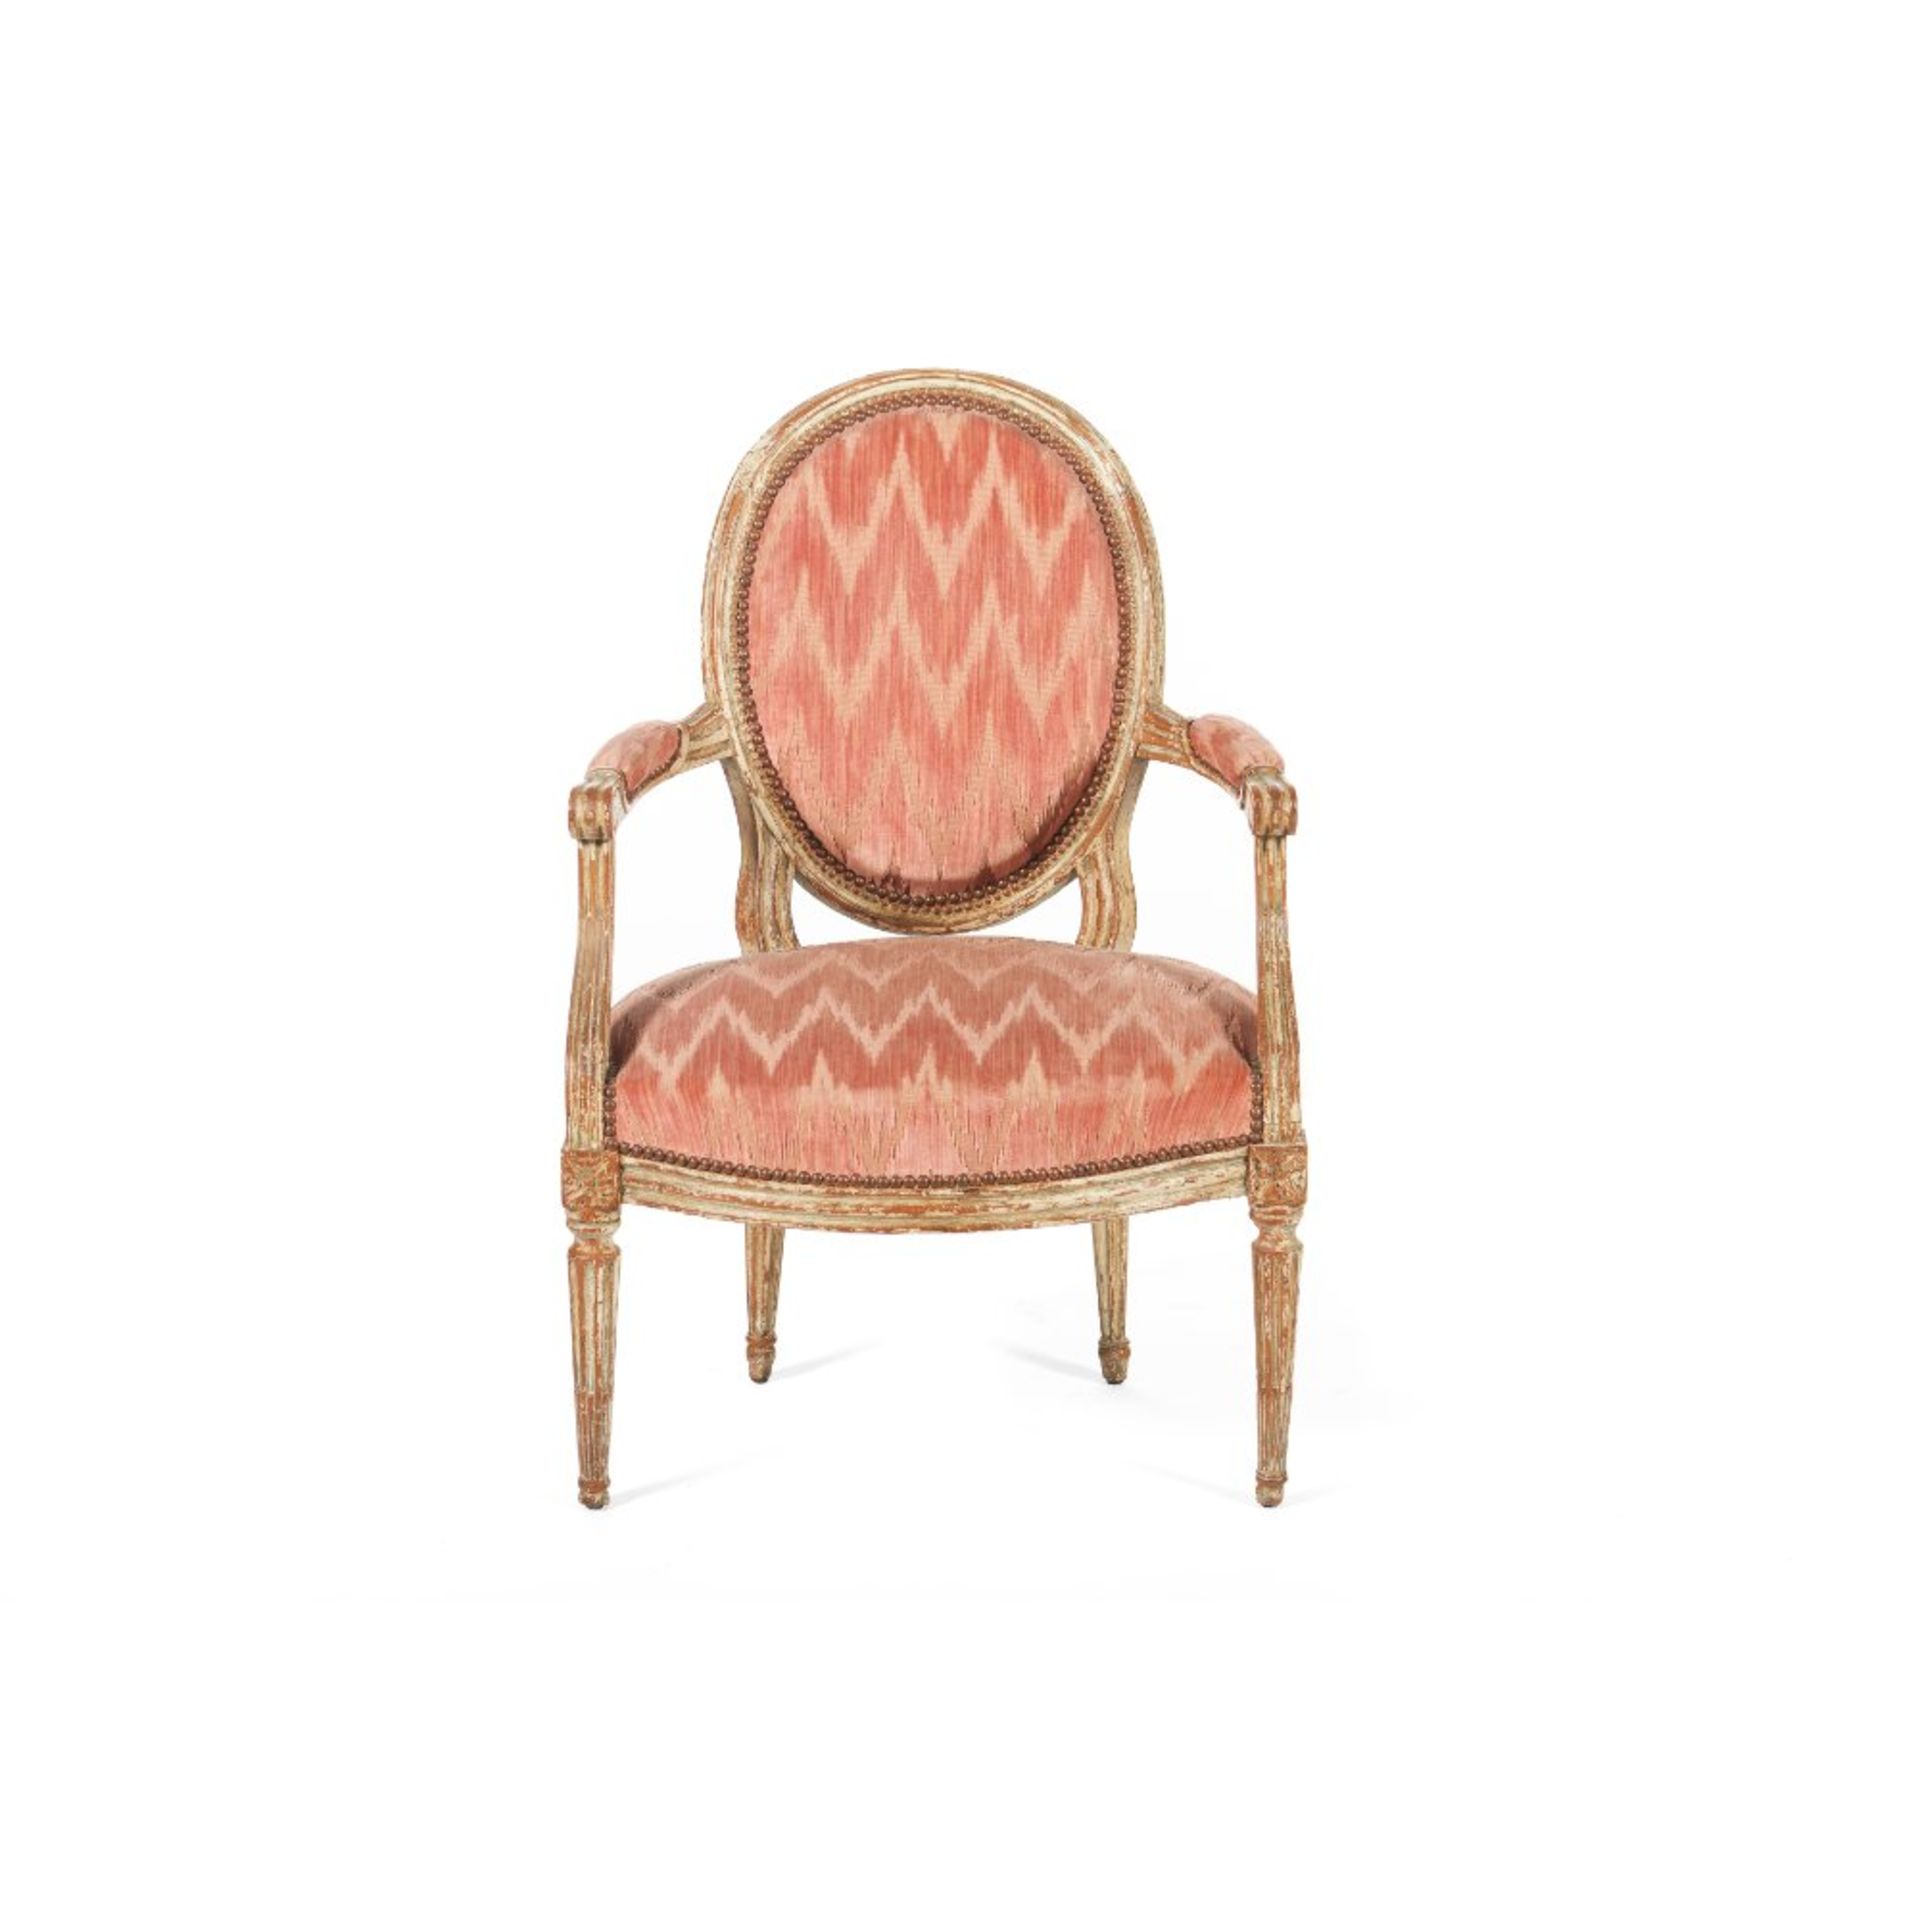 A Pair of Louis XVI fauteuils - Image 2 of 2